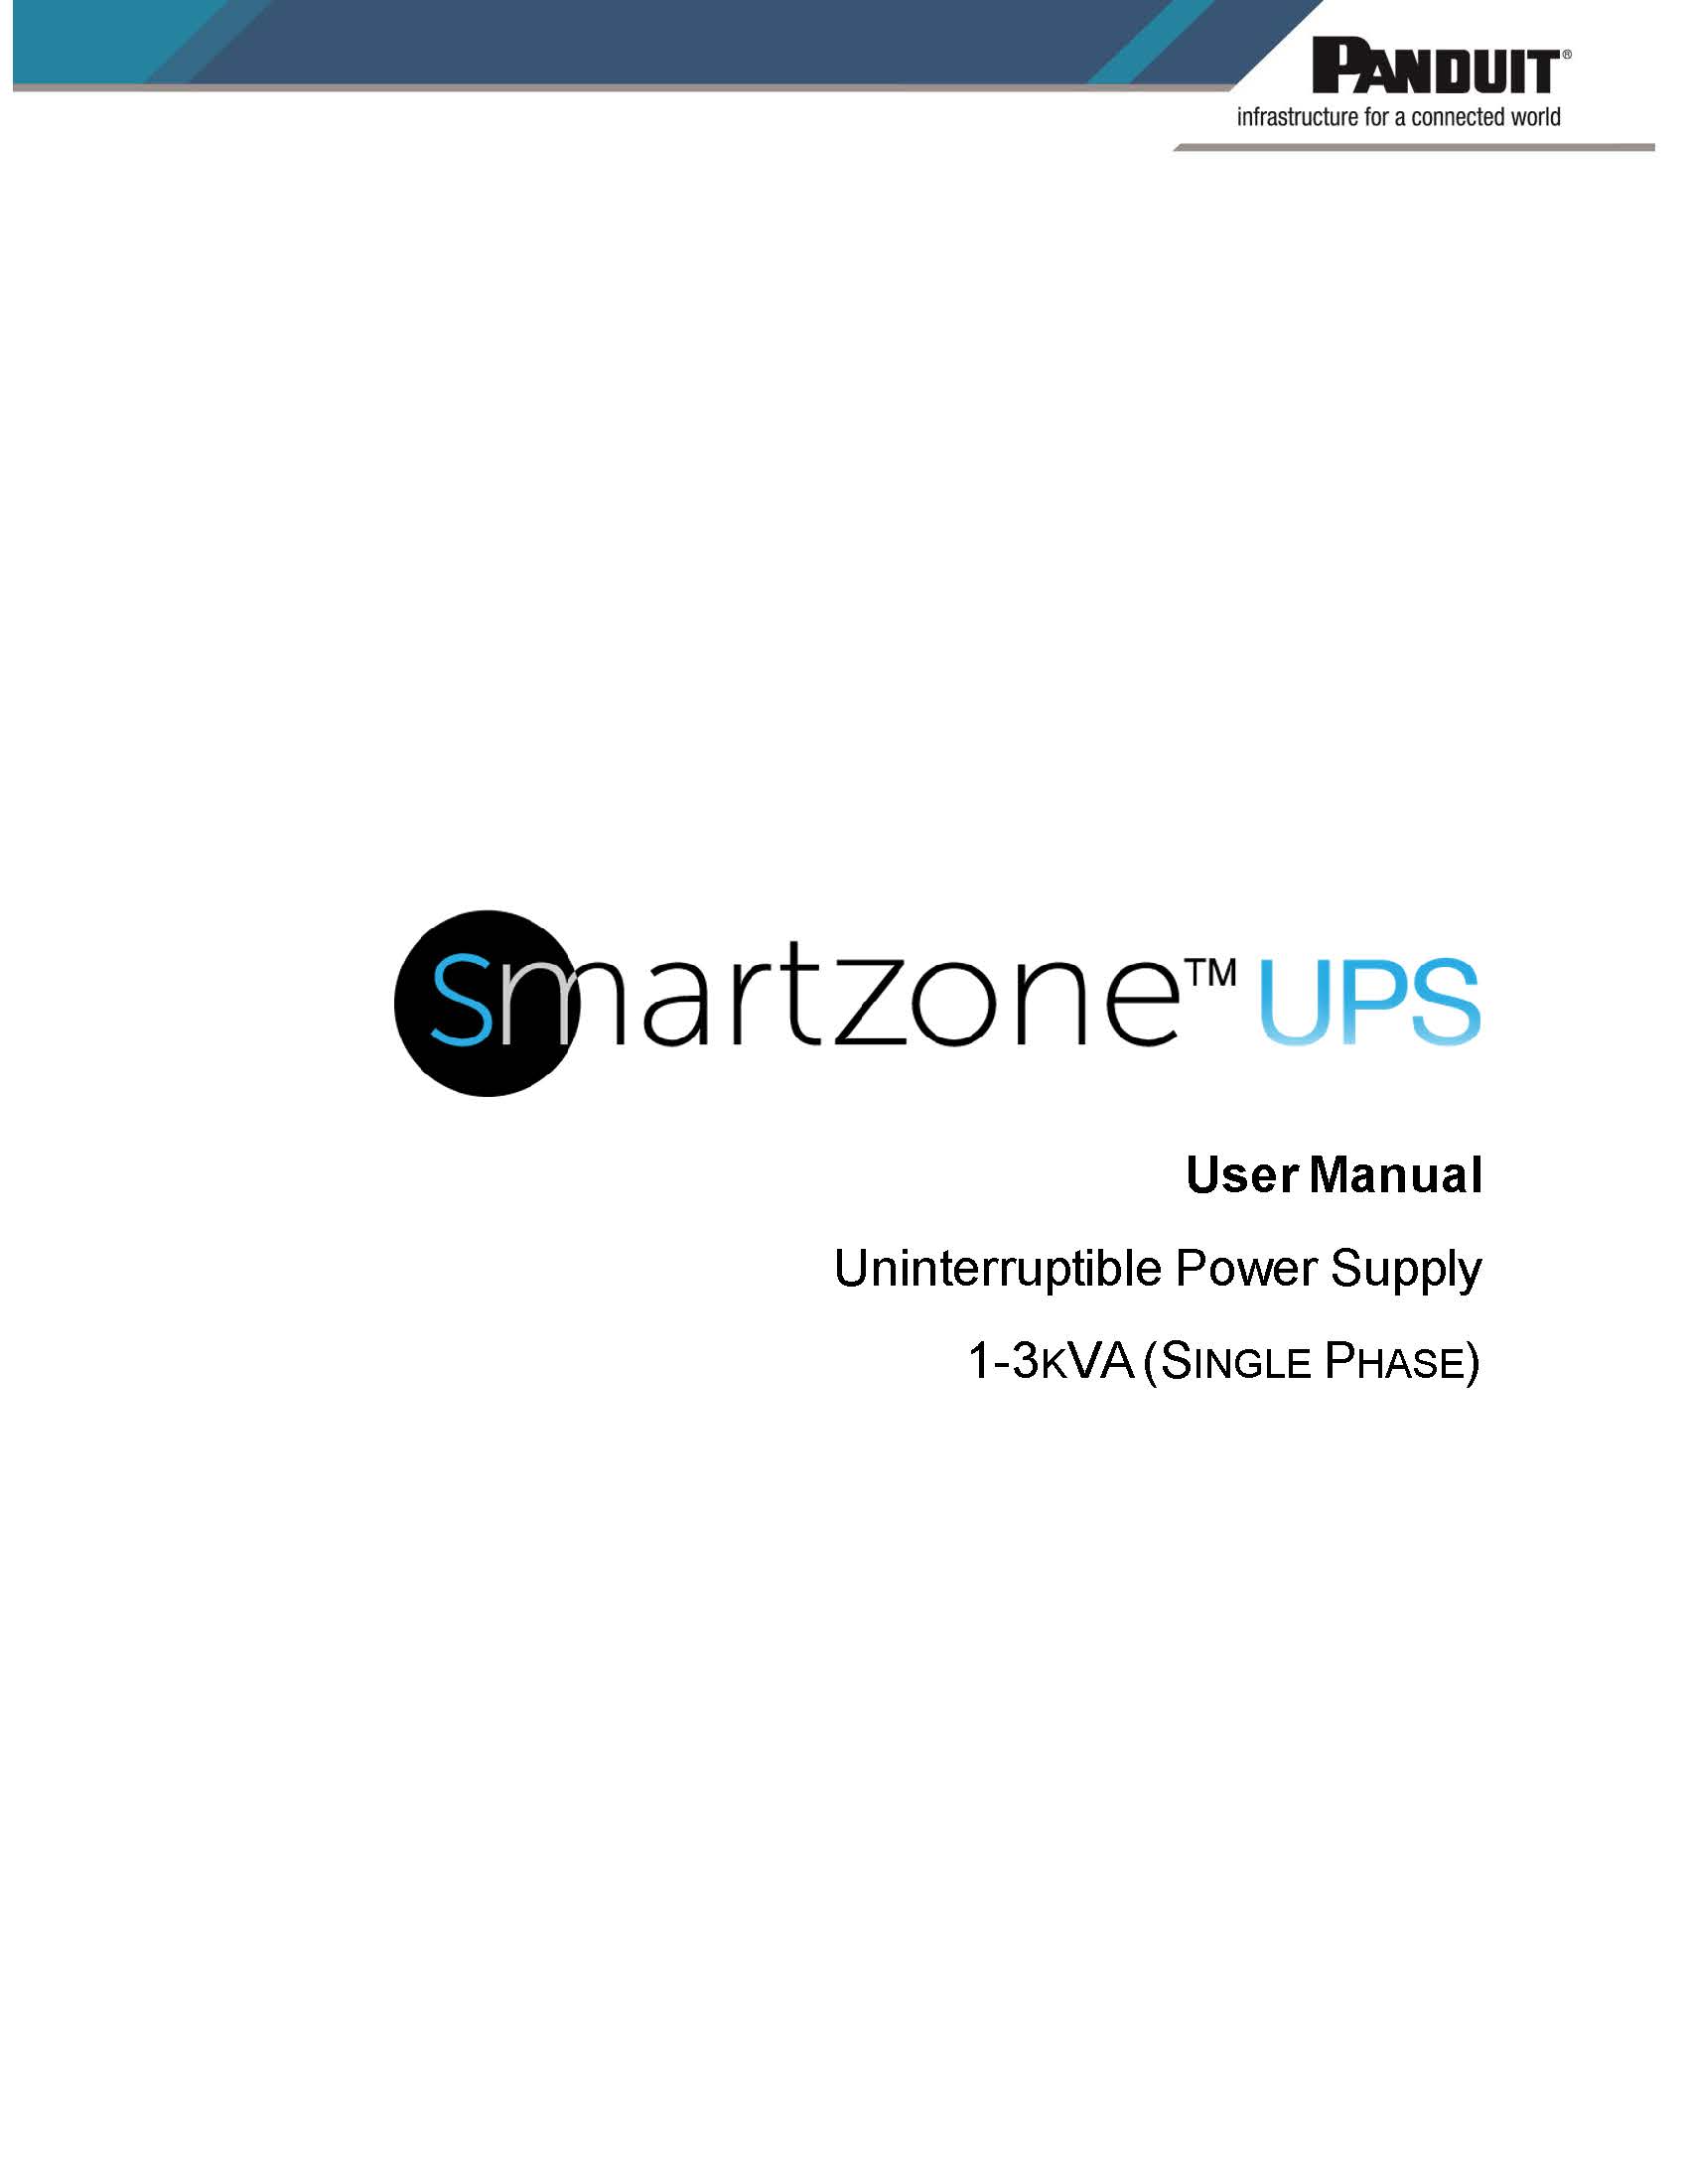 SZ UPS 1-3 kVA User Manual_Page_01.jpg